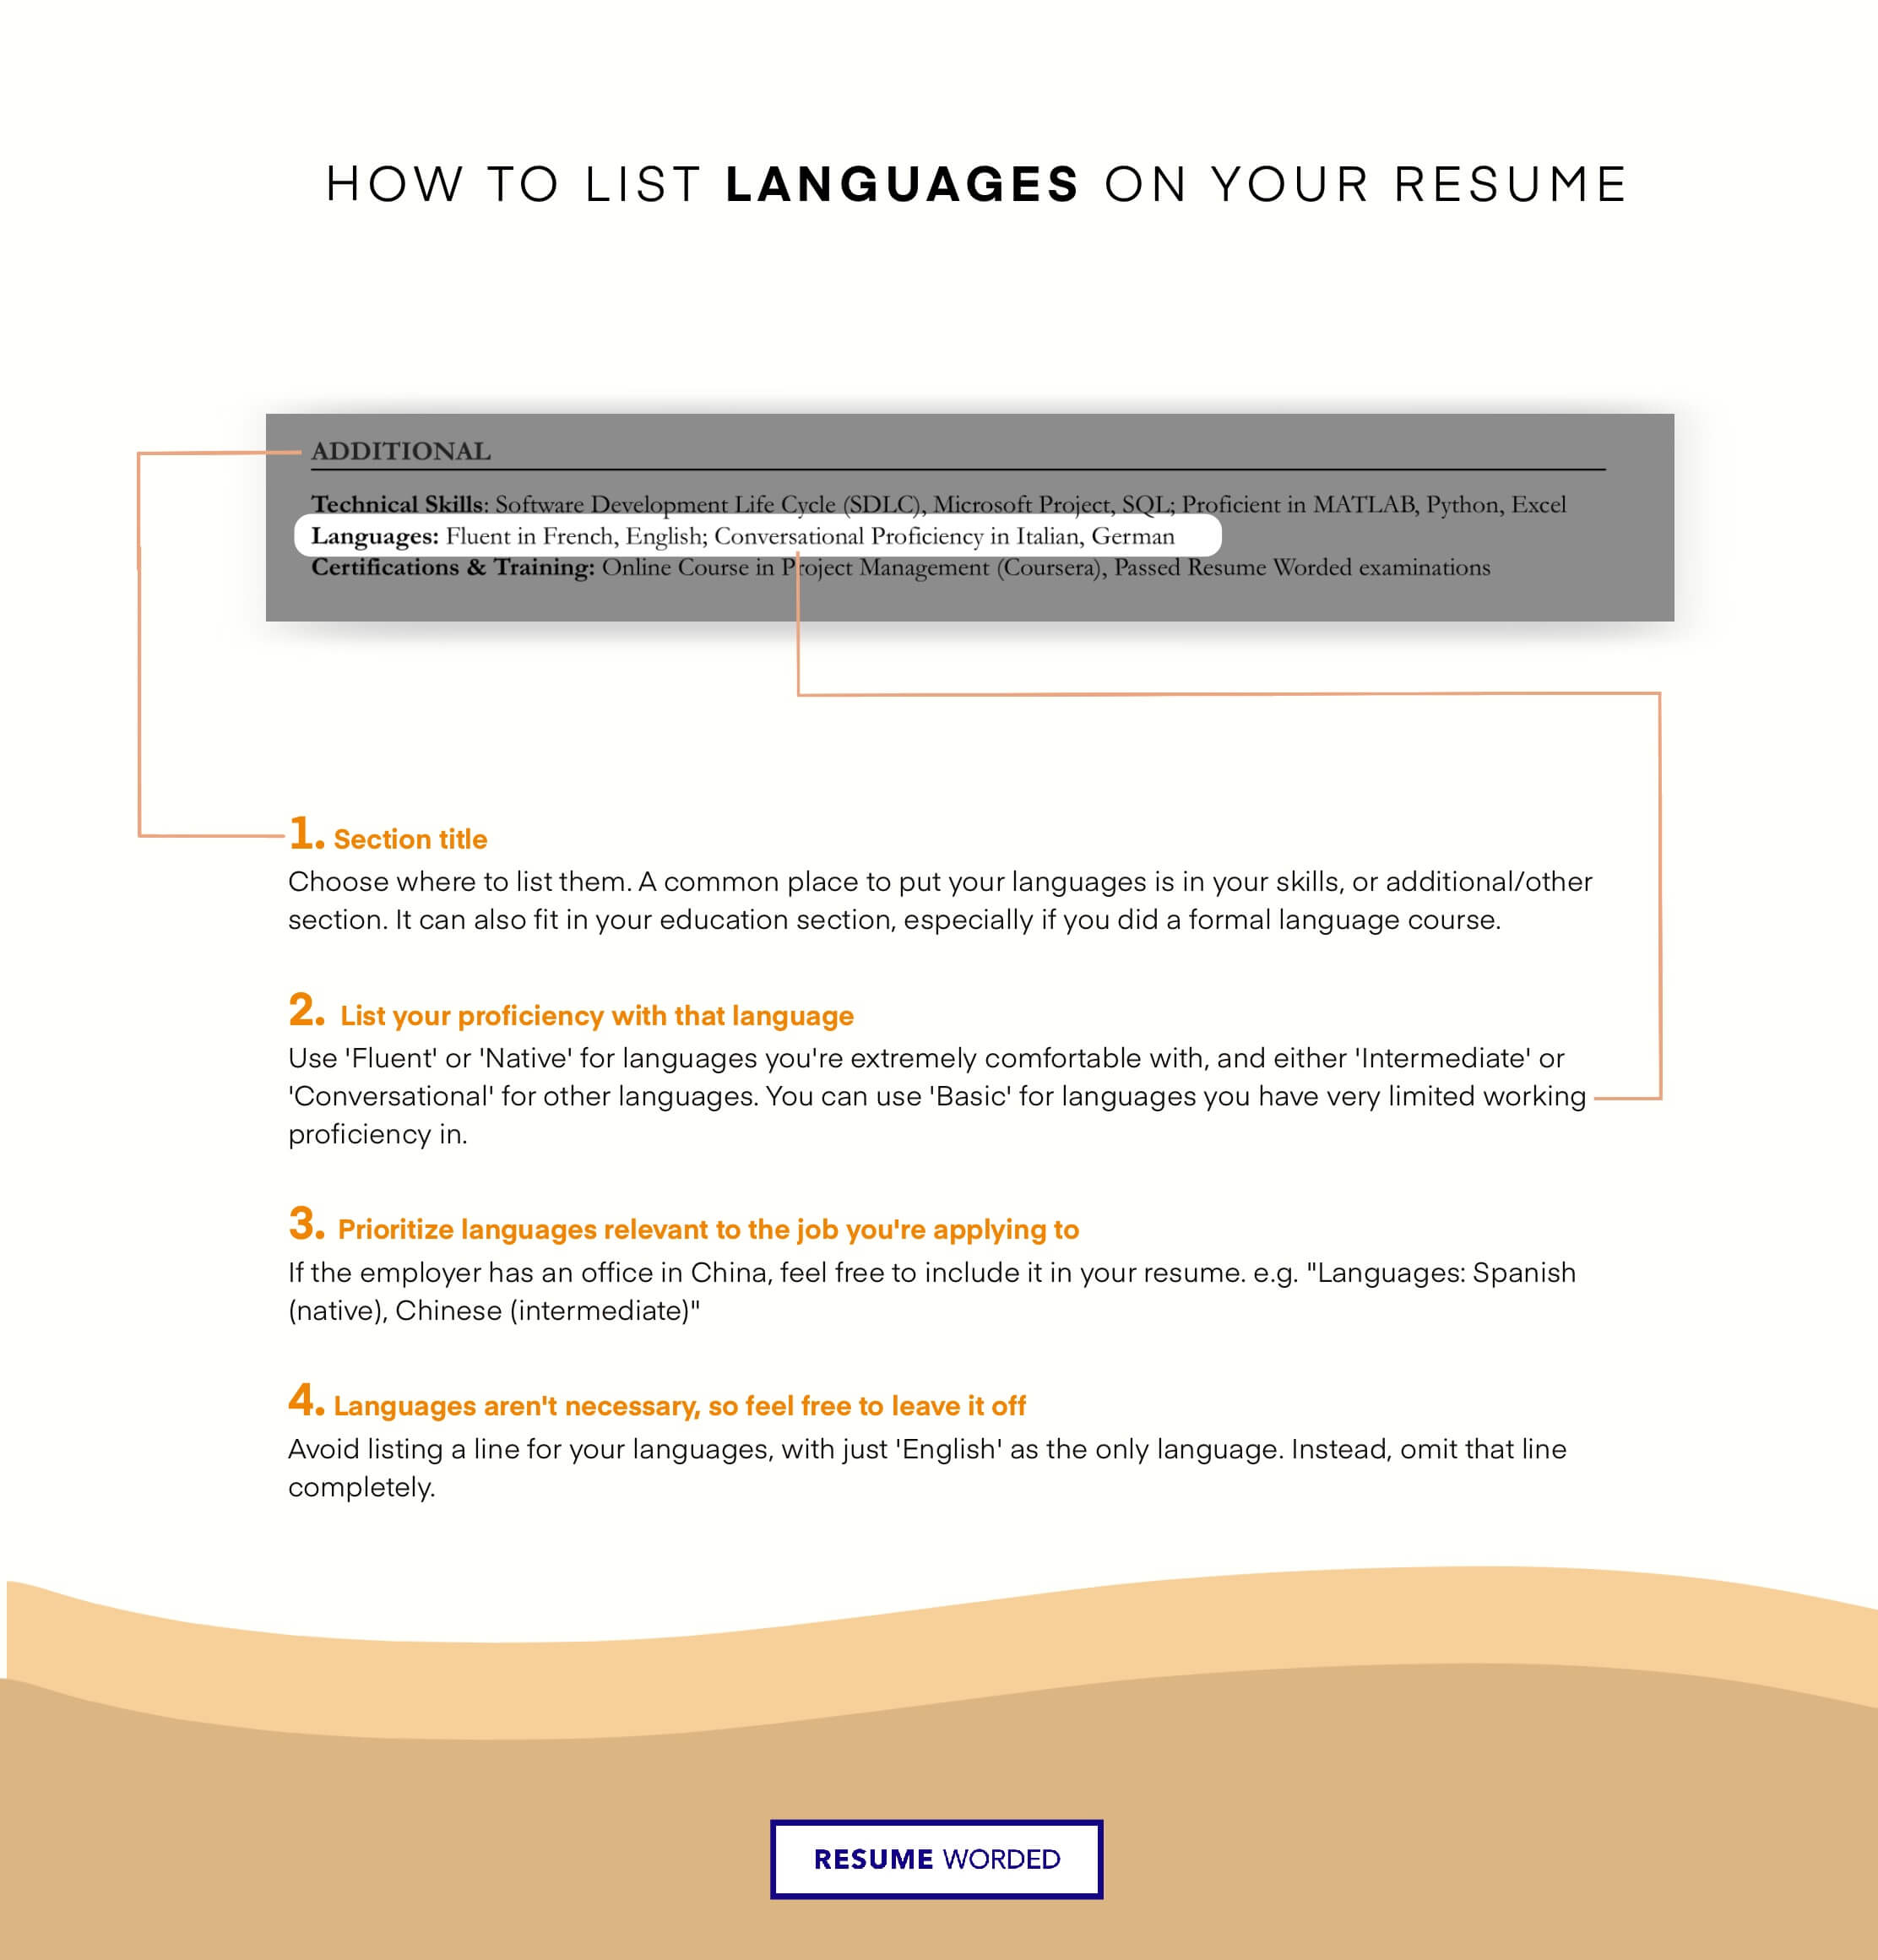 Highlight your language proficiencies. - Market Research Specialist / Market Researcher Resume